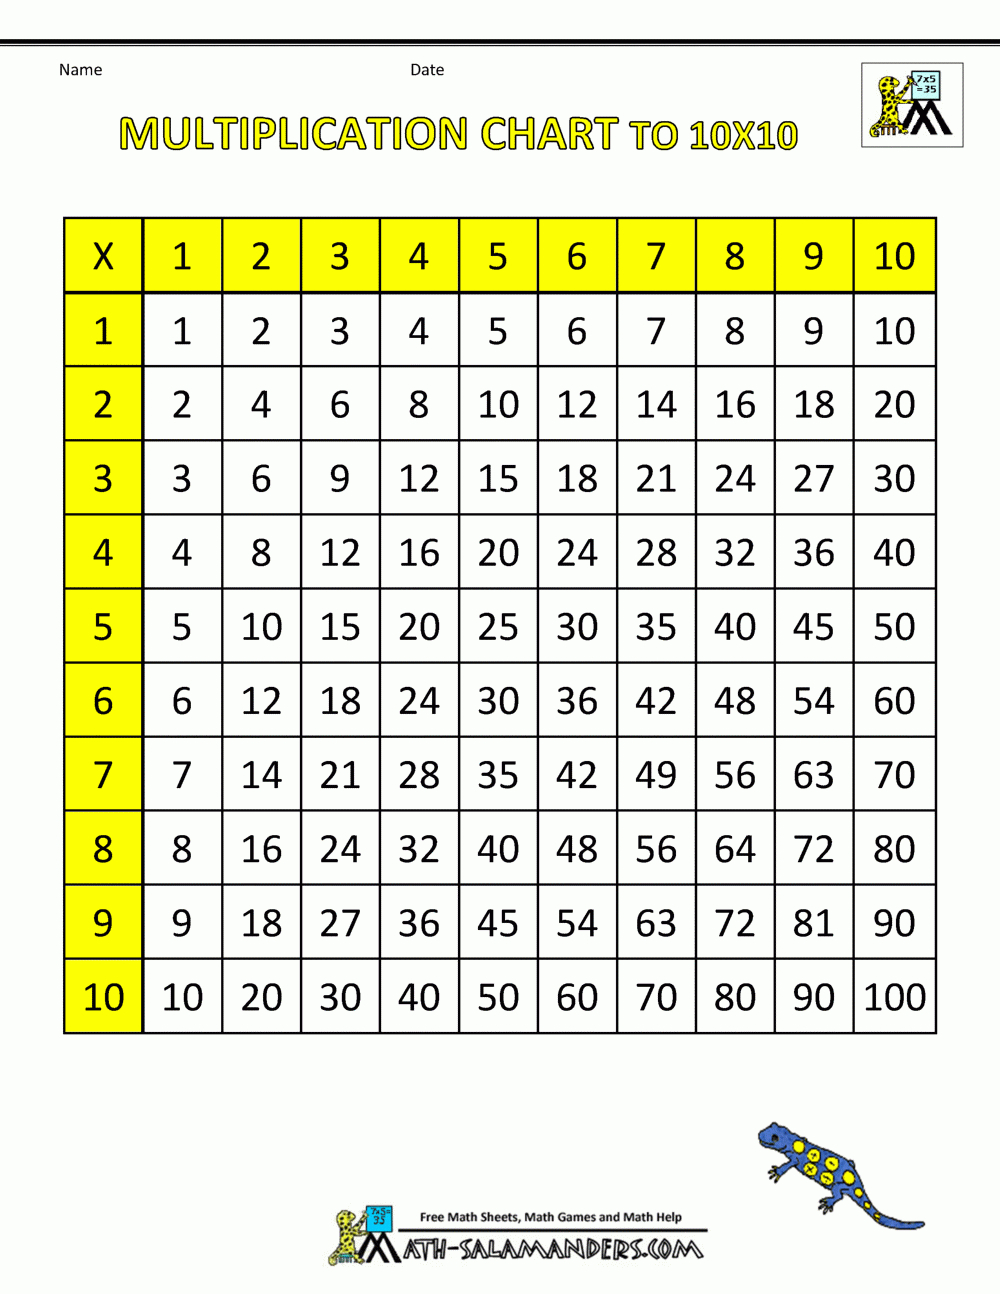 times-tables-multiplication-chart-tatkaxo